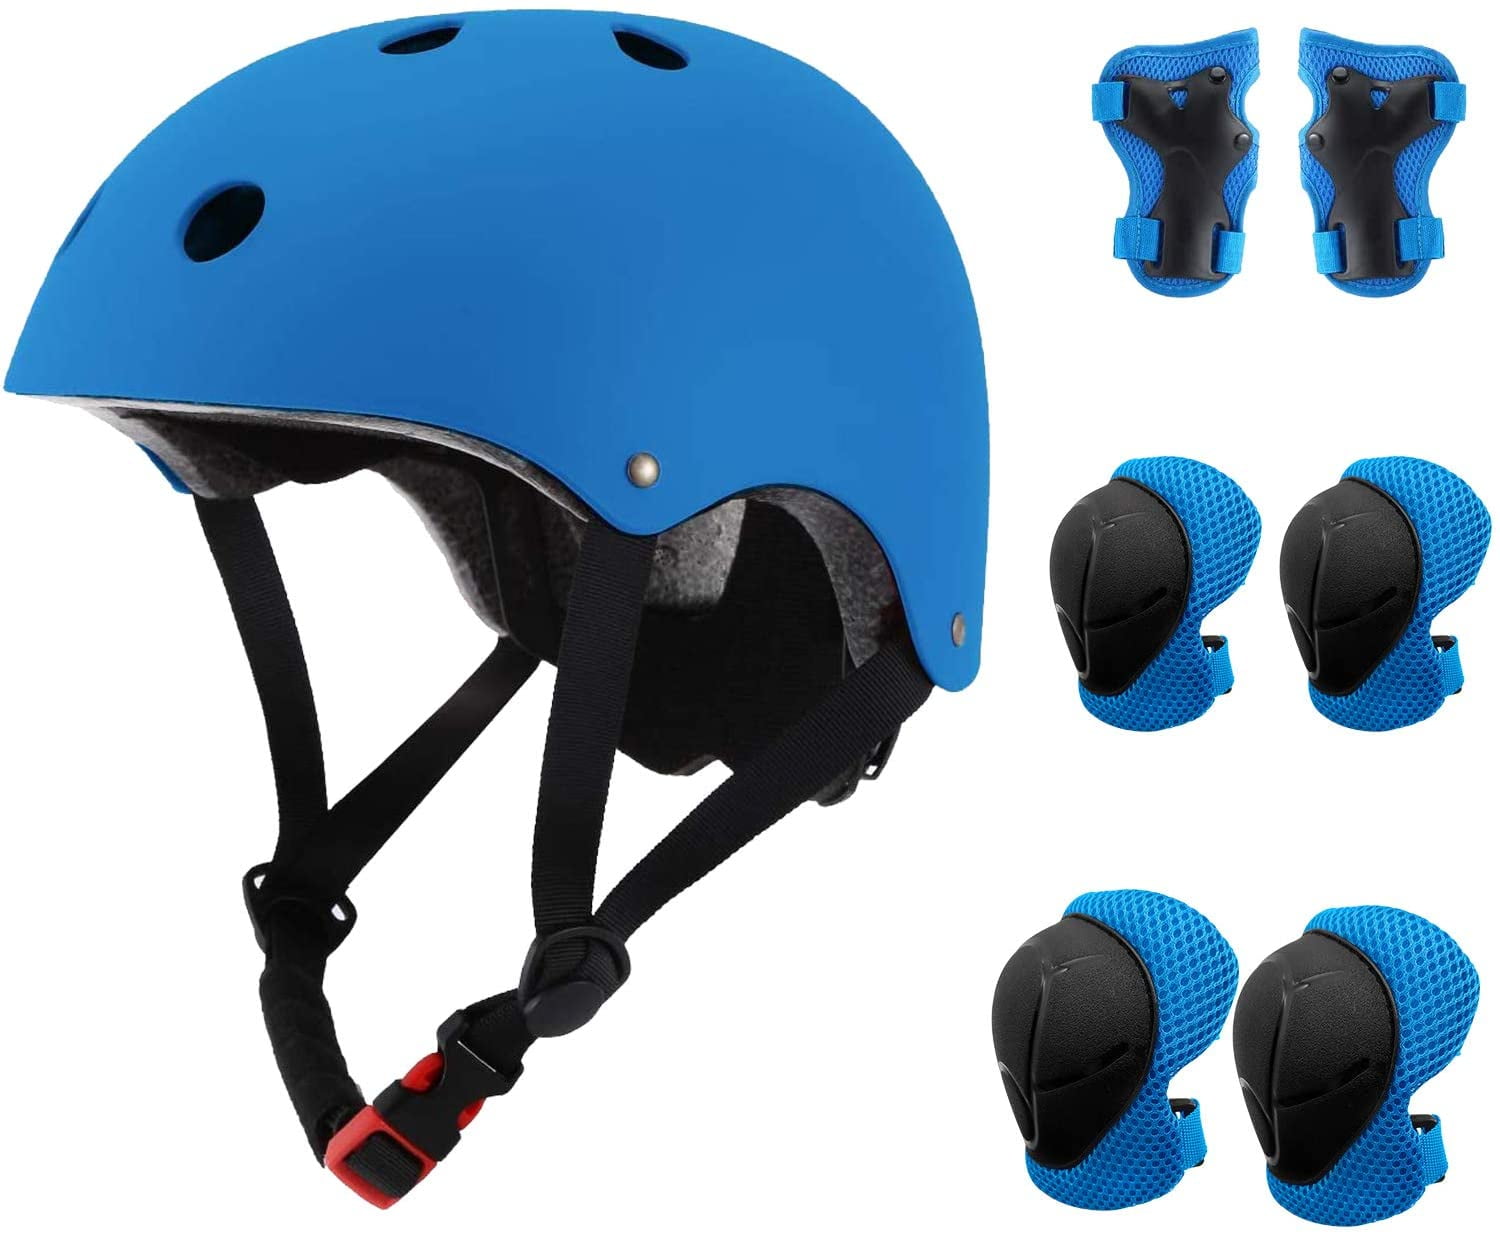 Raleigh Mystery Hero Boys LED Bike Cycle Safety Helmet Elbow Knee Pad Set Blue 